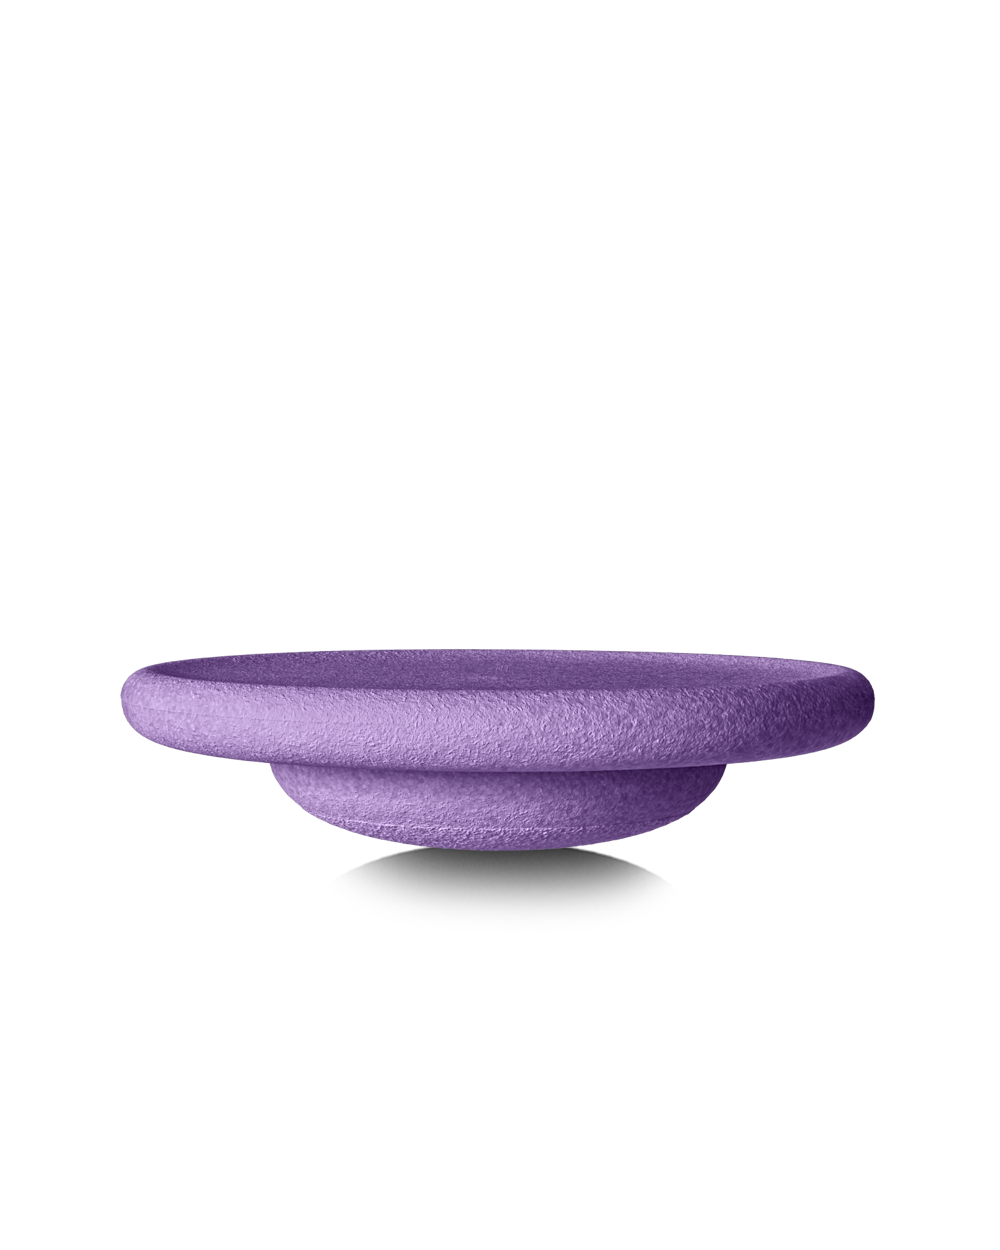 Stapelstein® Violet Balance Board